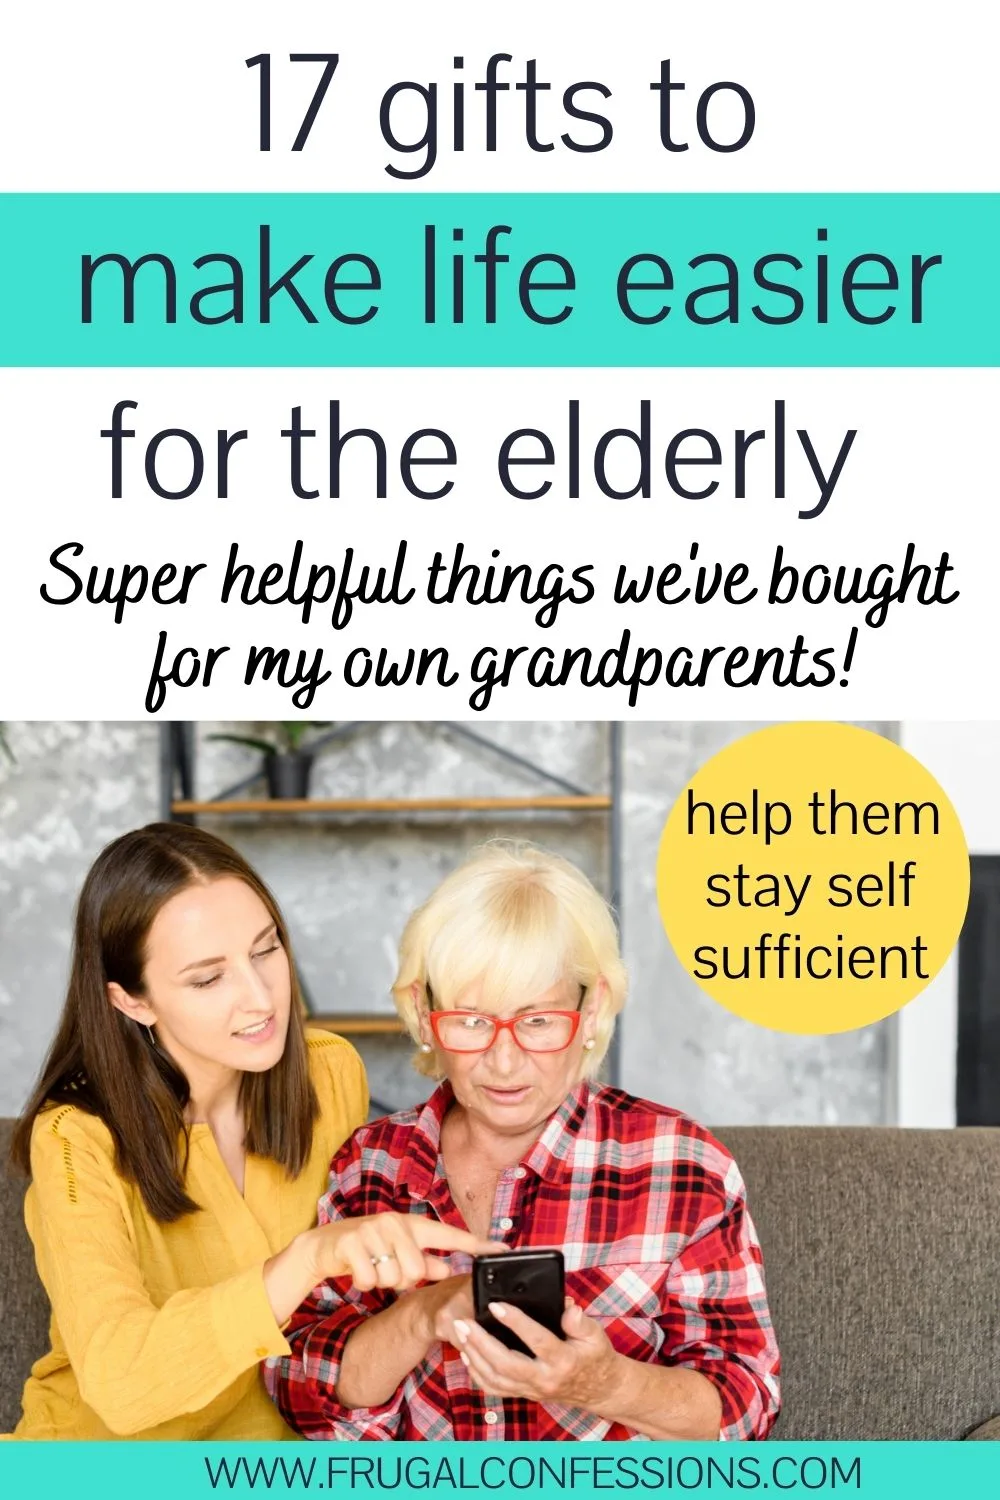 https://www.frugalconfessions.com/wp-content/uploads/2021/07/gifts-to-make-life-easier-for-elderly.jpg.webp